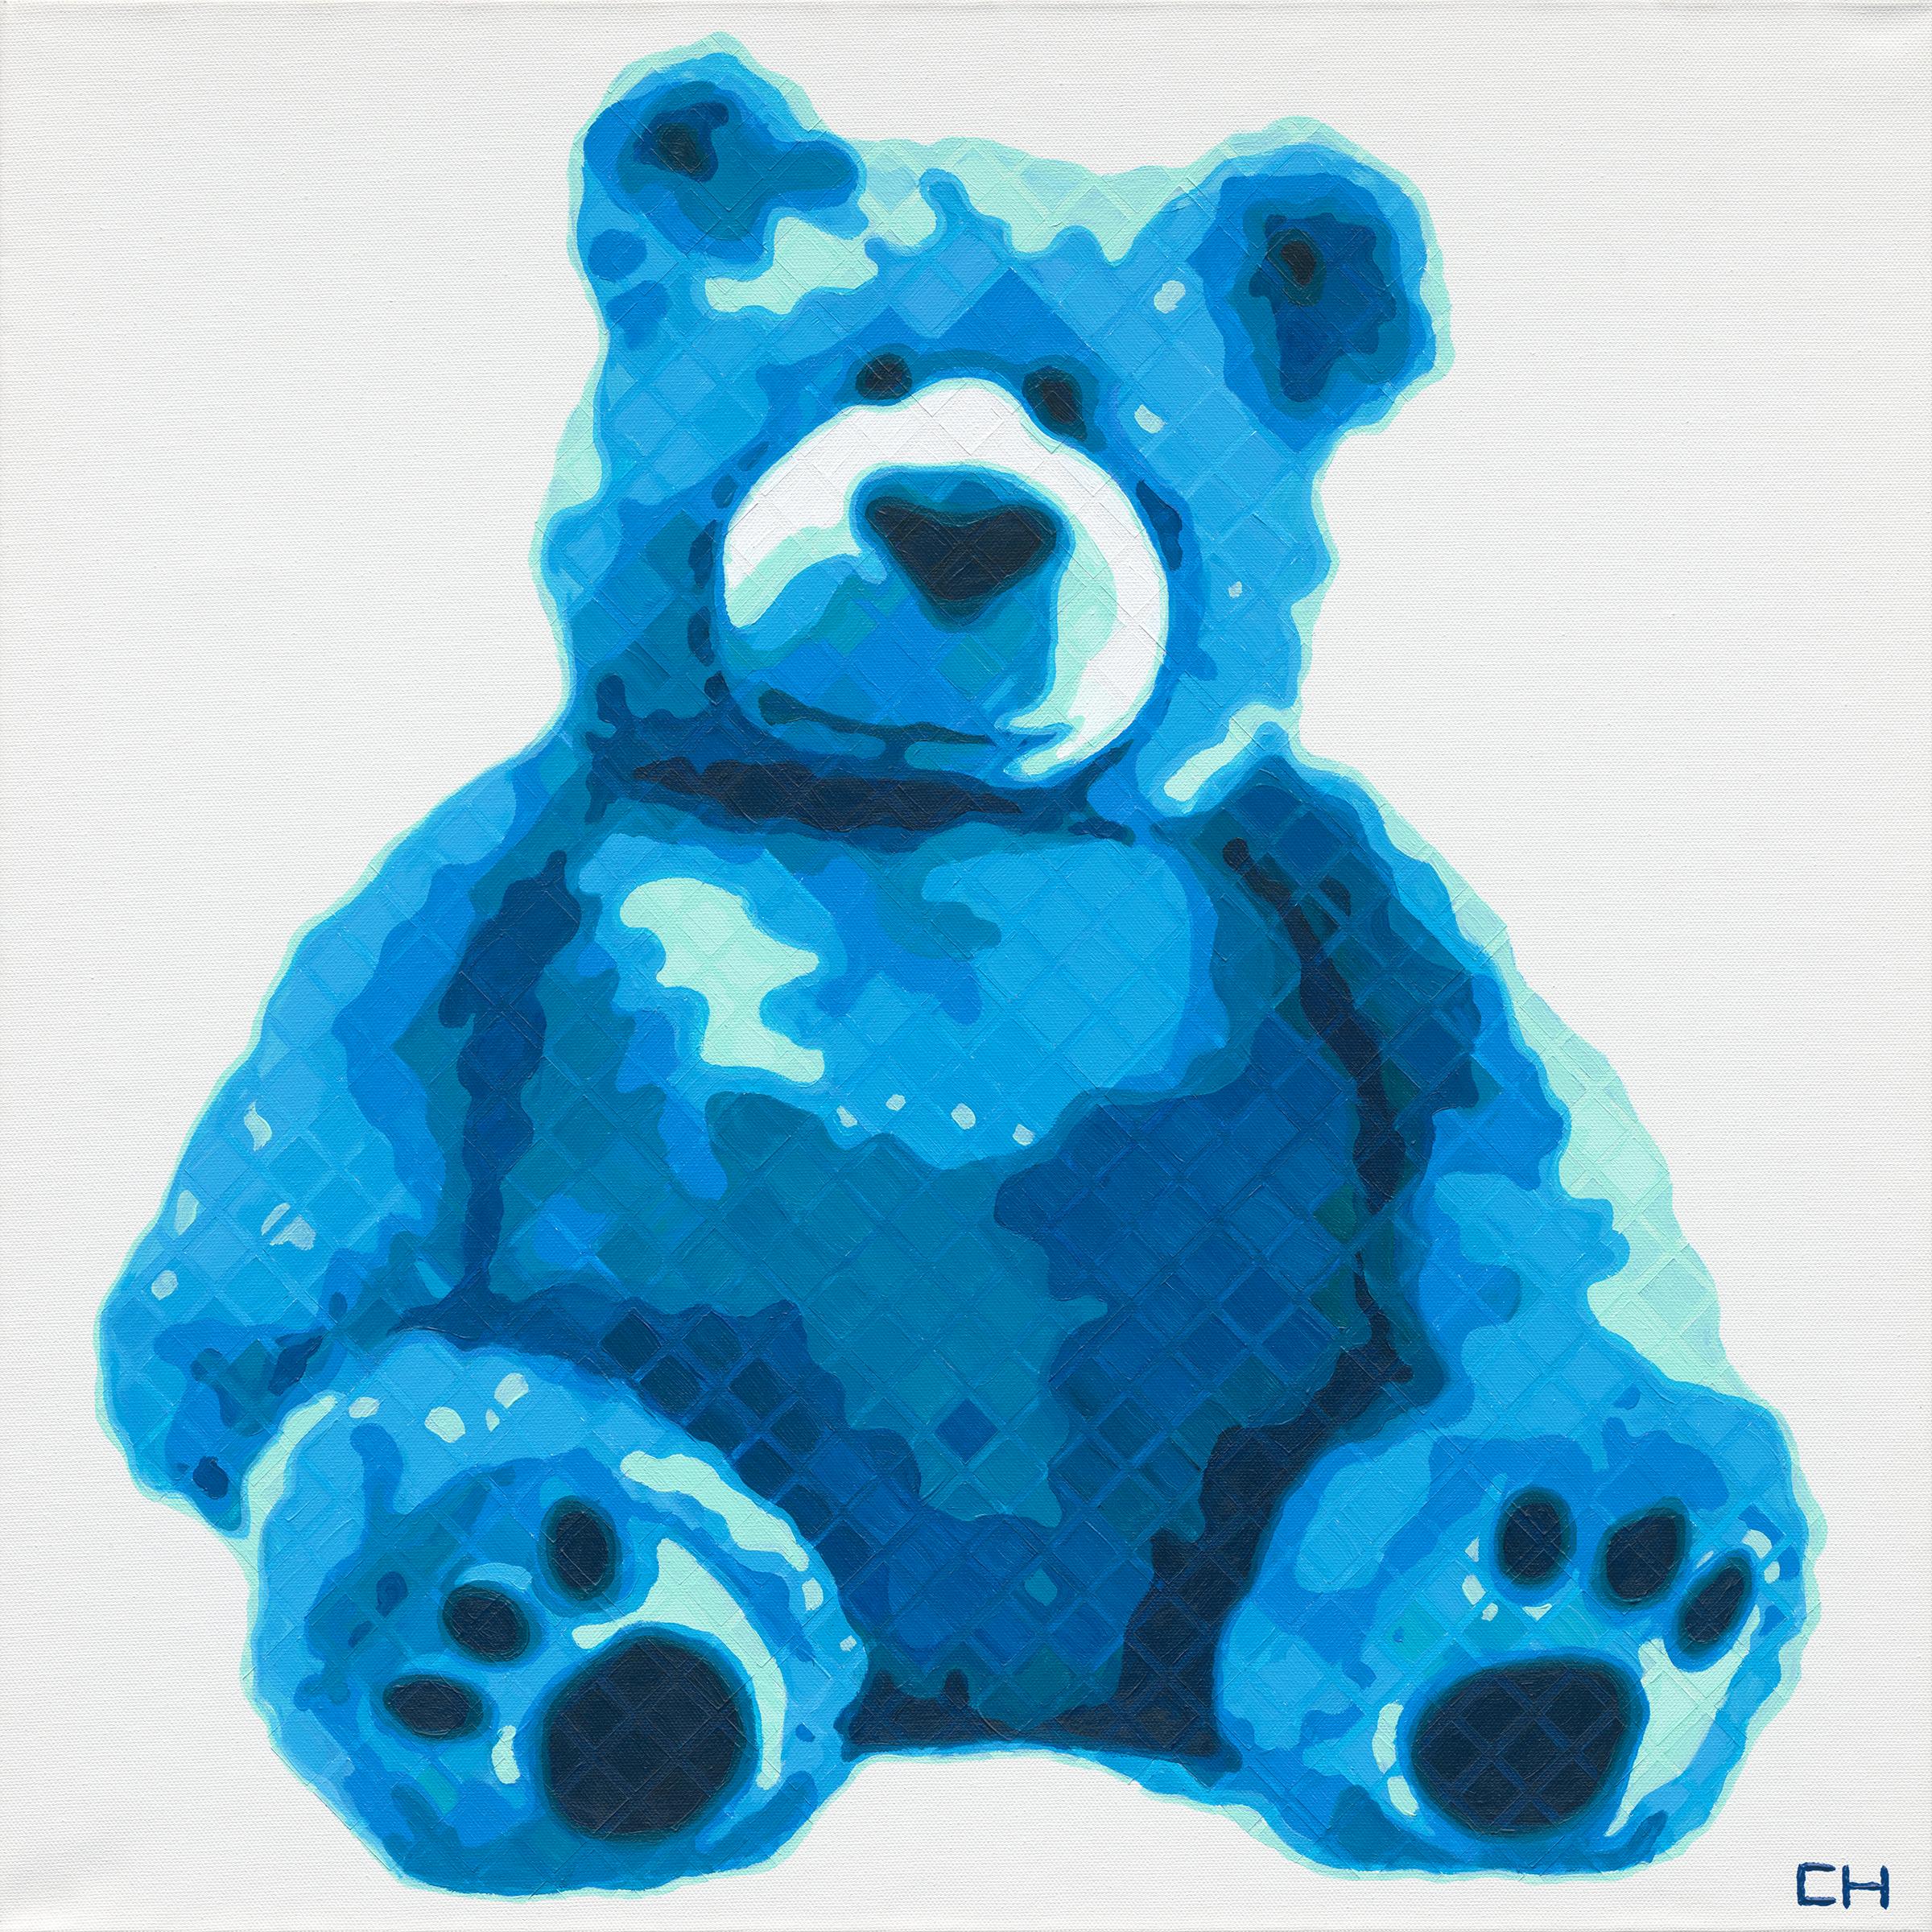 Charlie Hanavich Abstract Painting - "Teddy in Blue" - Contemporary Pointillist Painting - Teddy Bear - Chuck Close